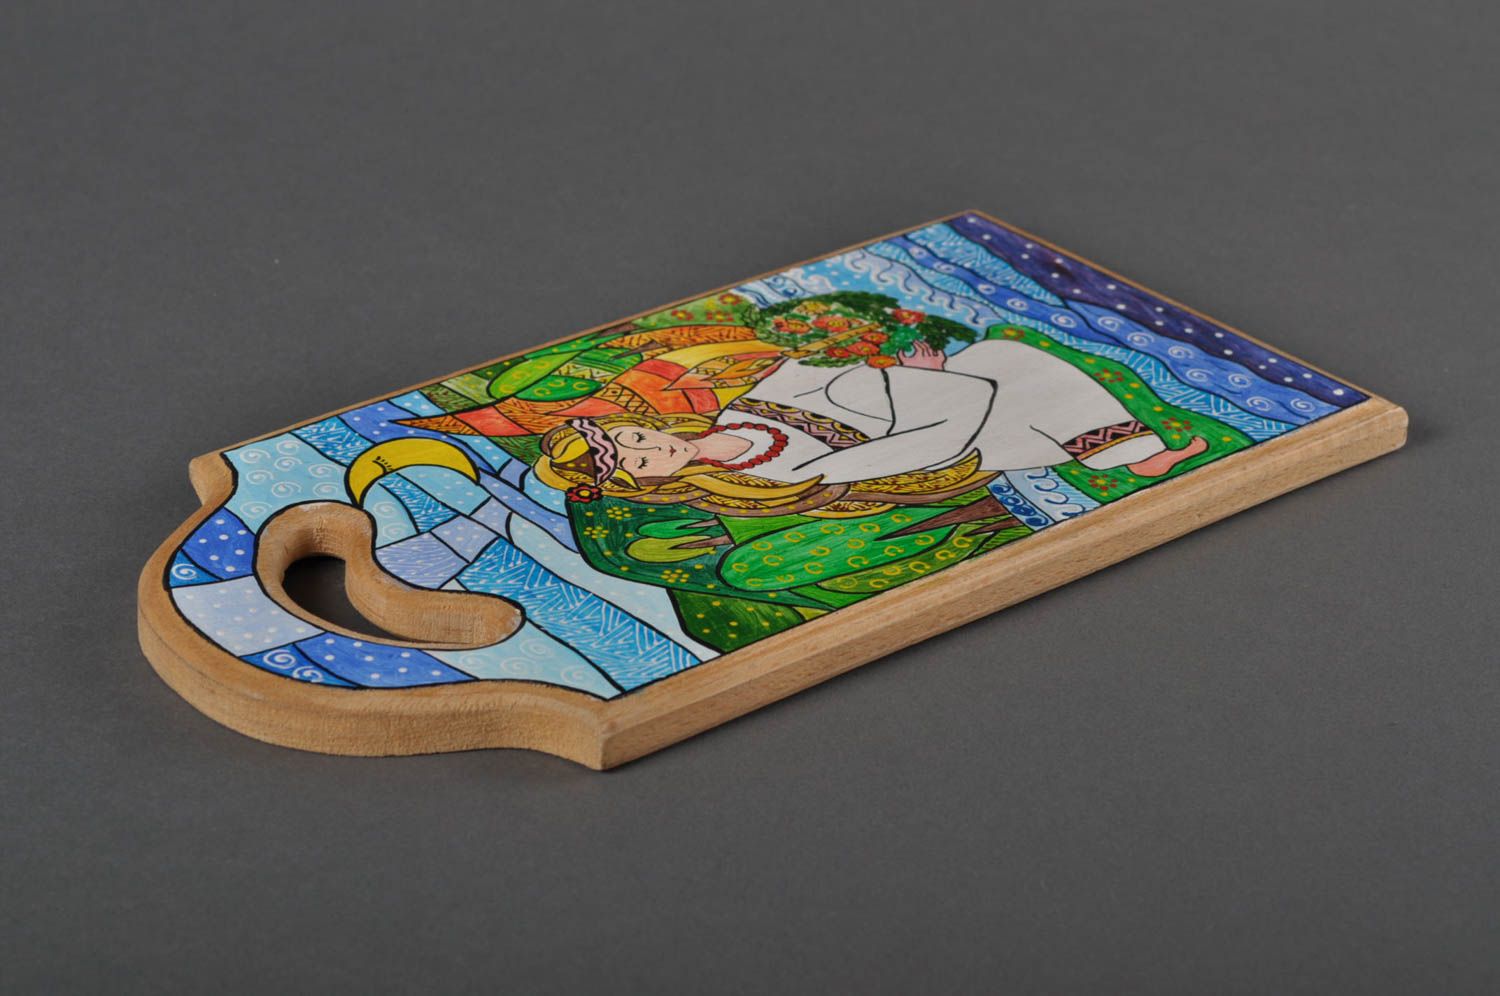 Handmade painted cutting board wooden chopping board wood craft kitchen design photo 5